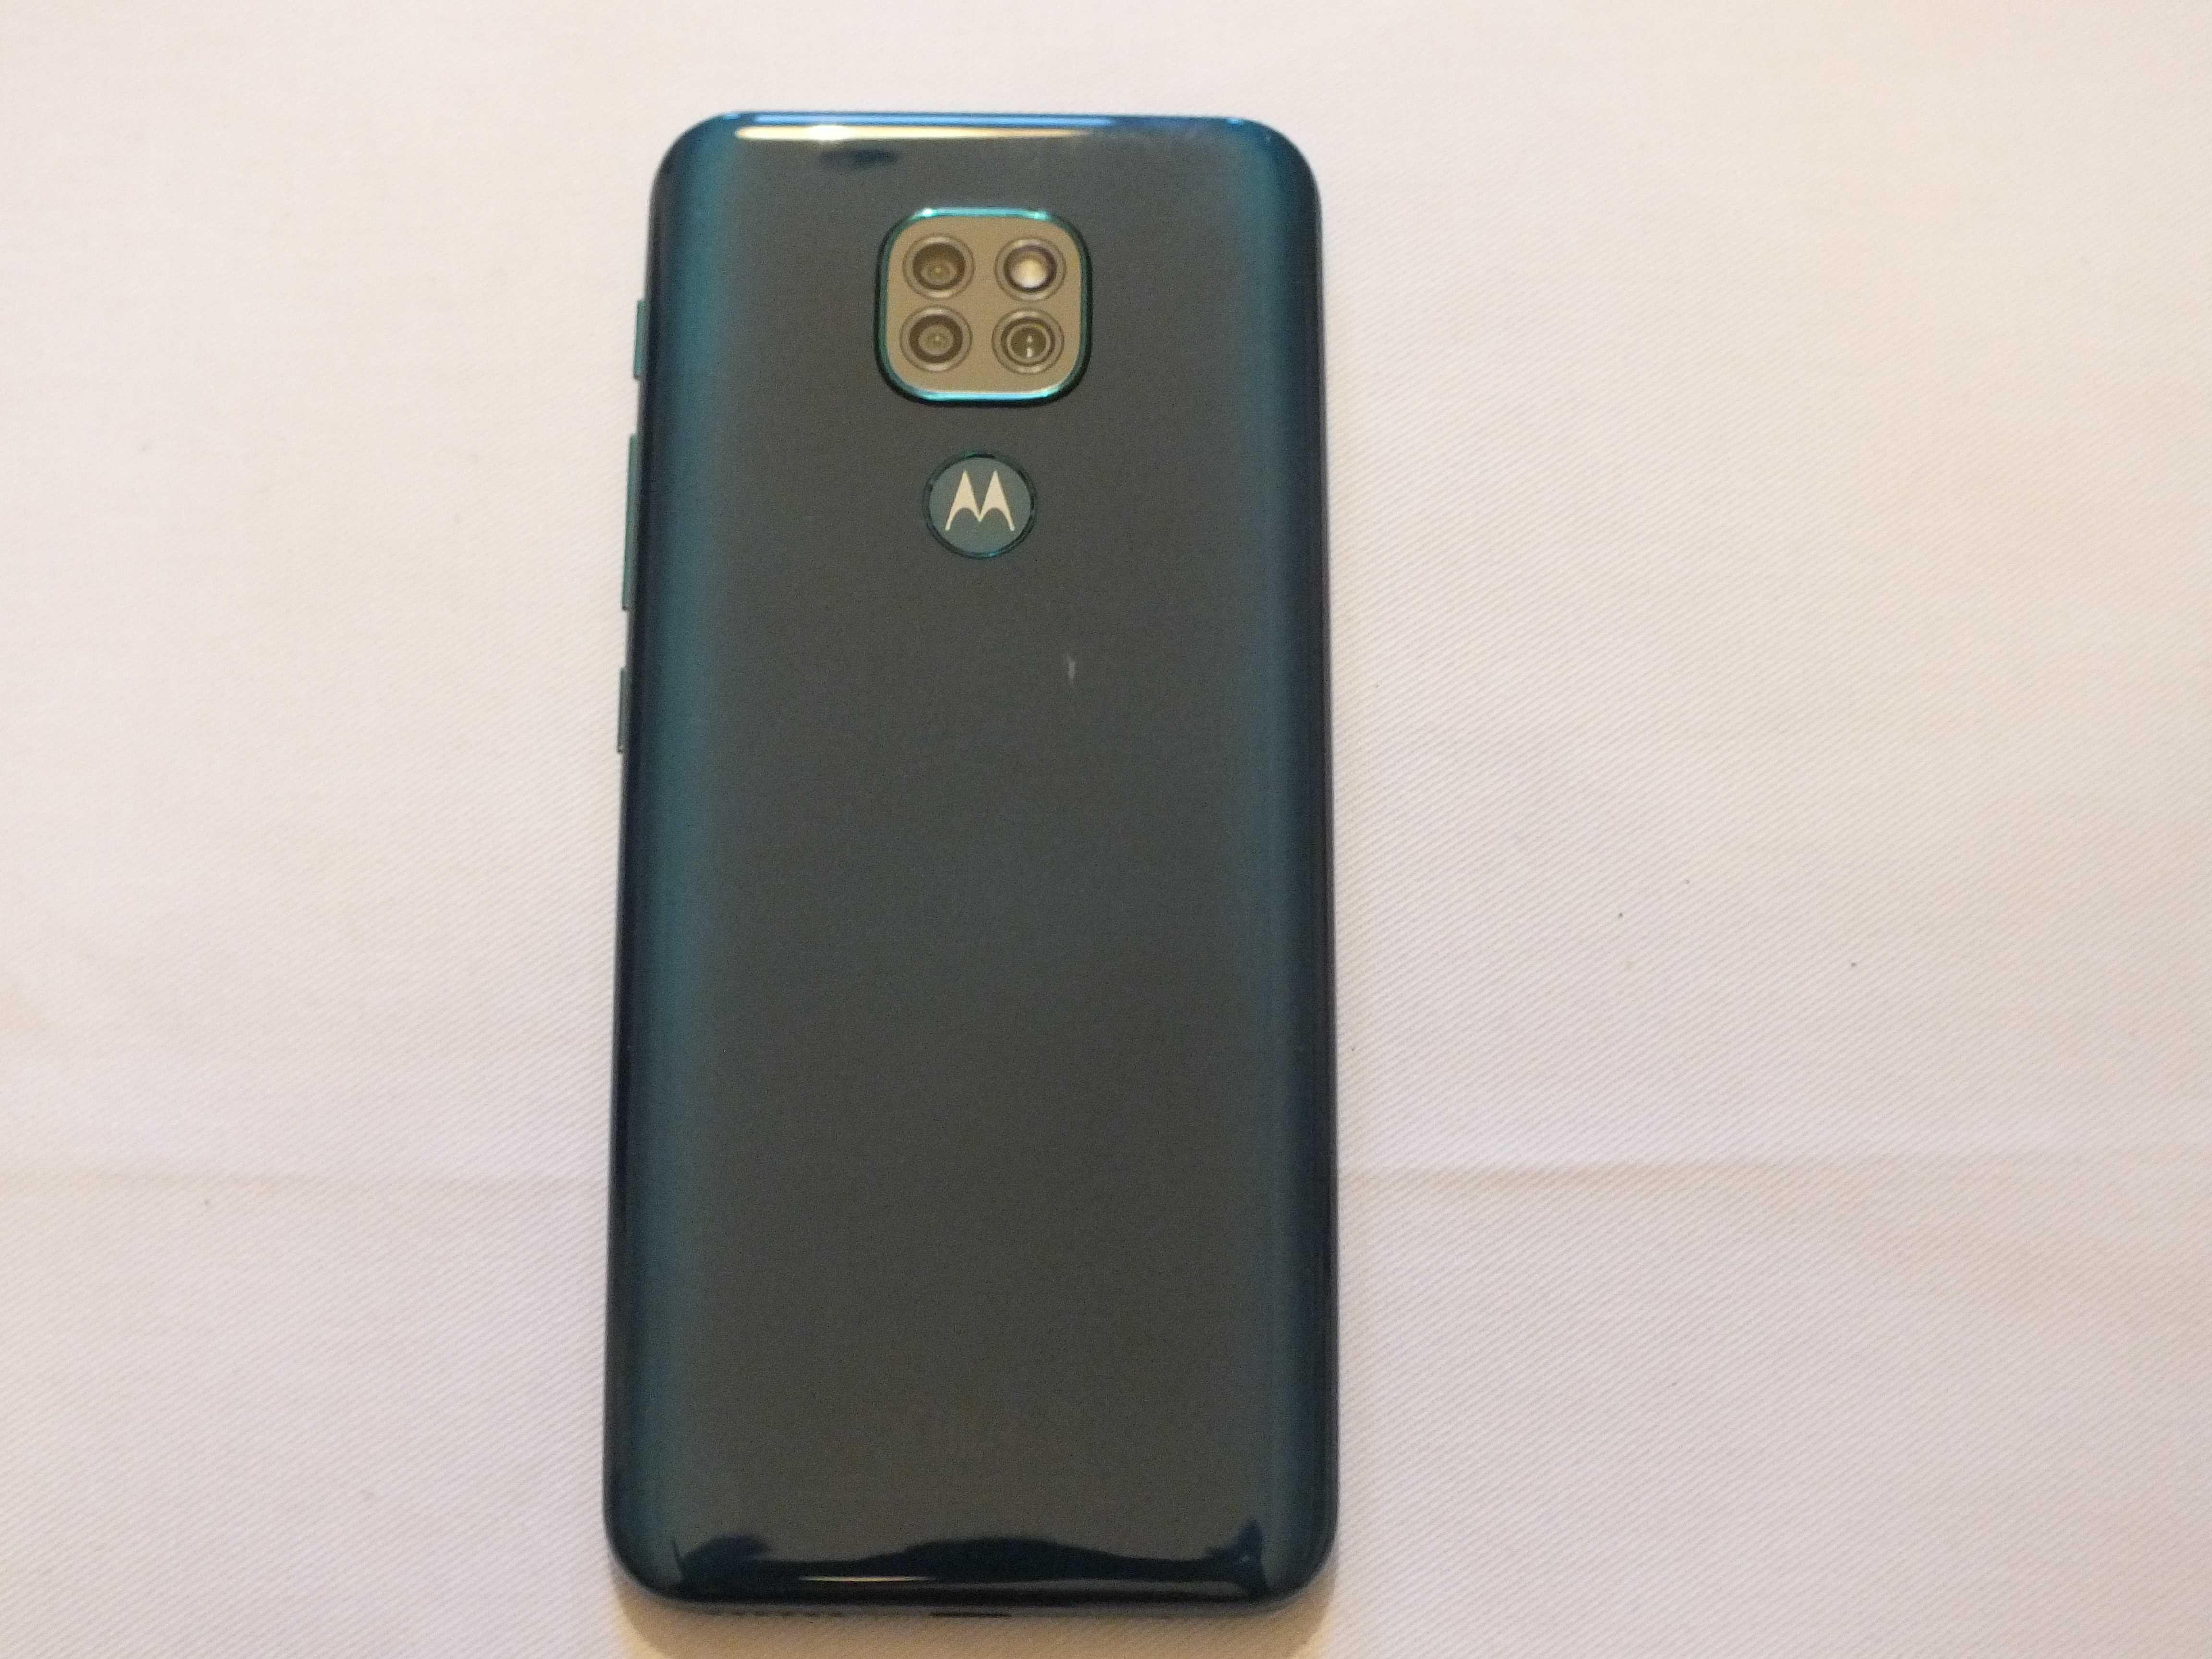 Okazja-Smartfon Motorola Moto G9 Play 4 GB / 64 GB zielony. Super Stan